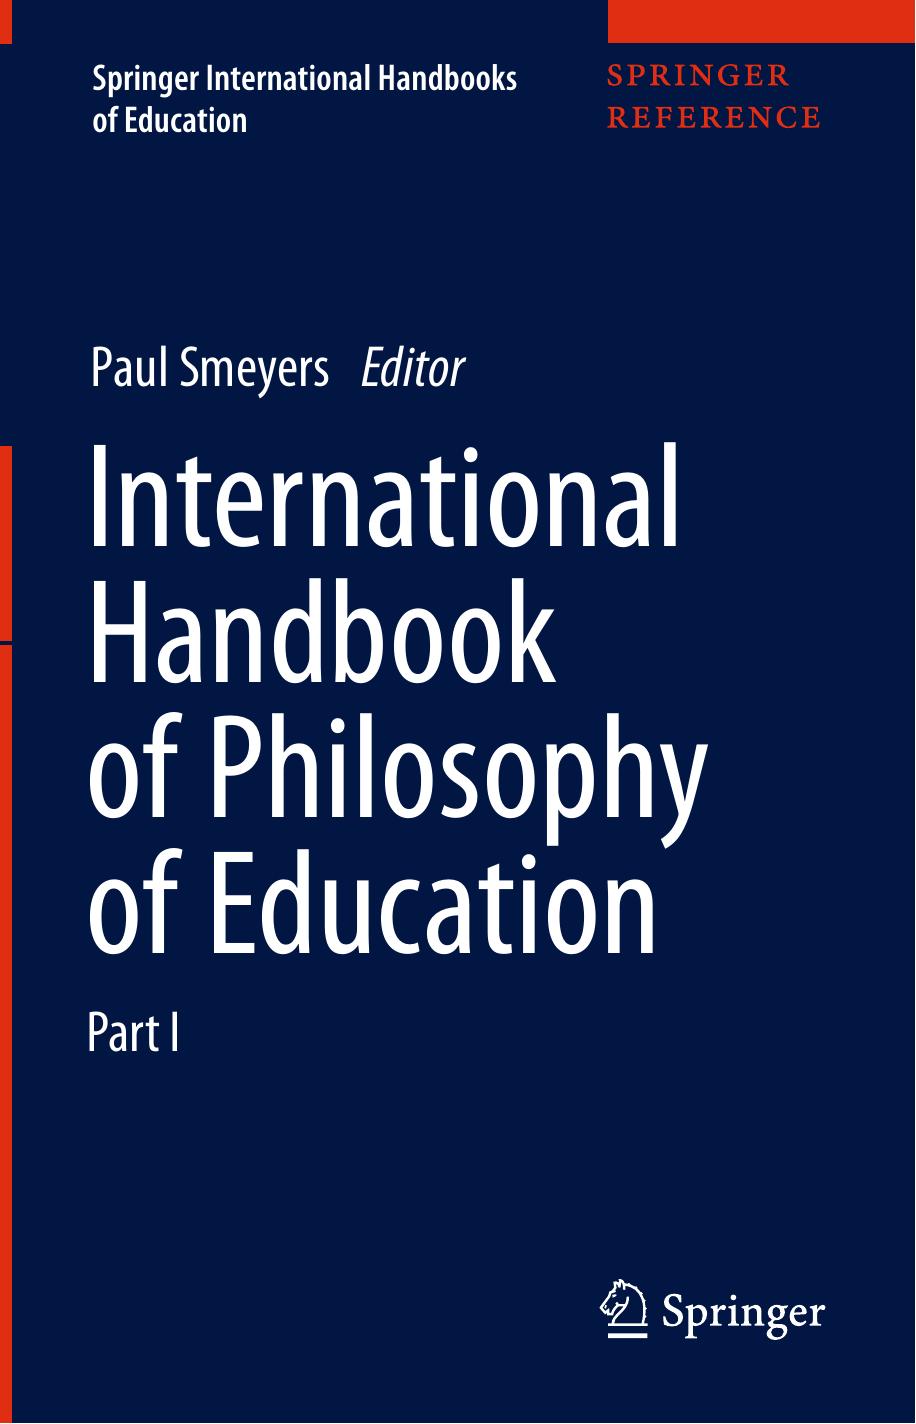 International Handbook of Philosophy of Education 2018.pdf